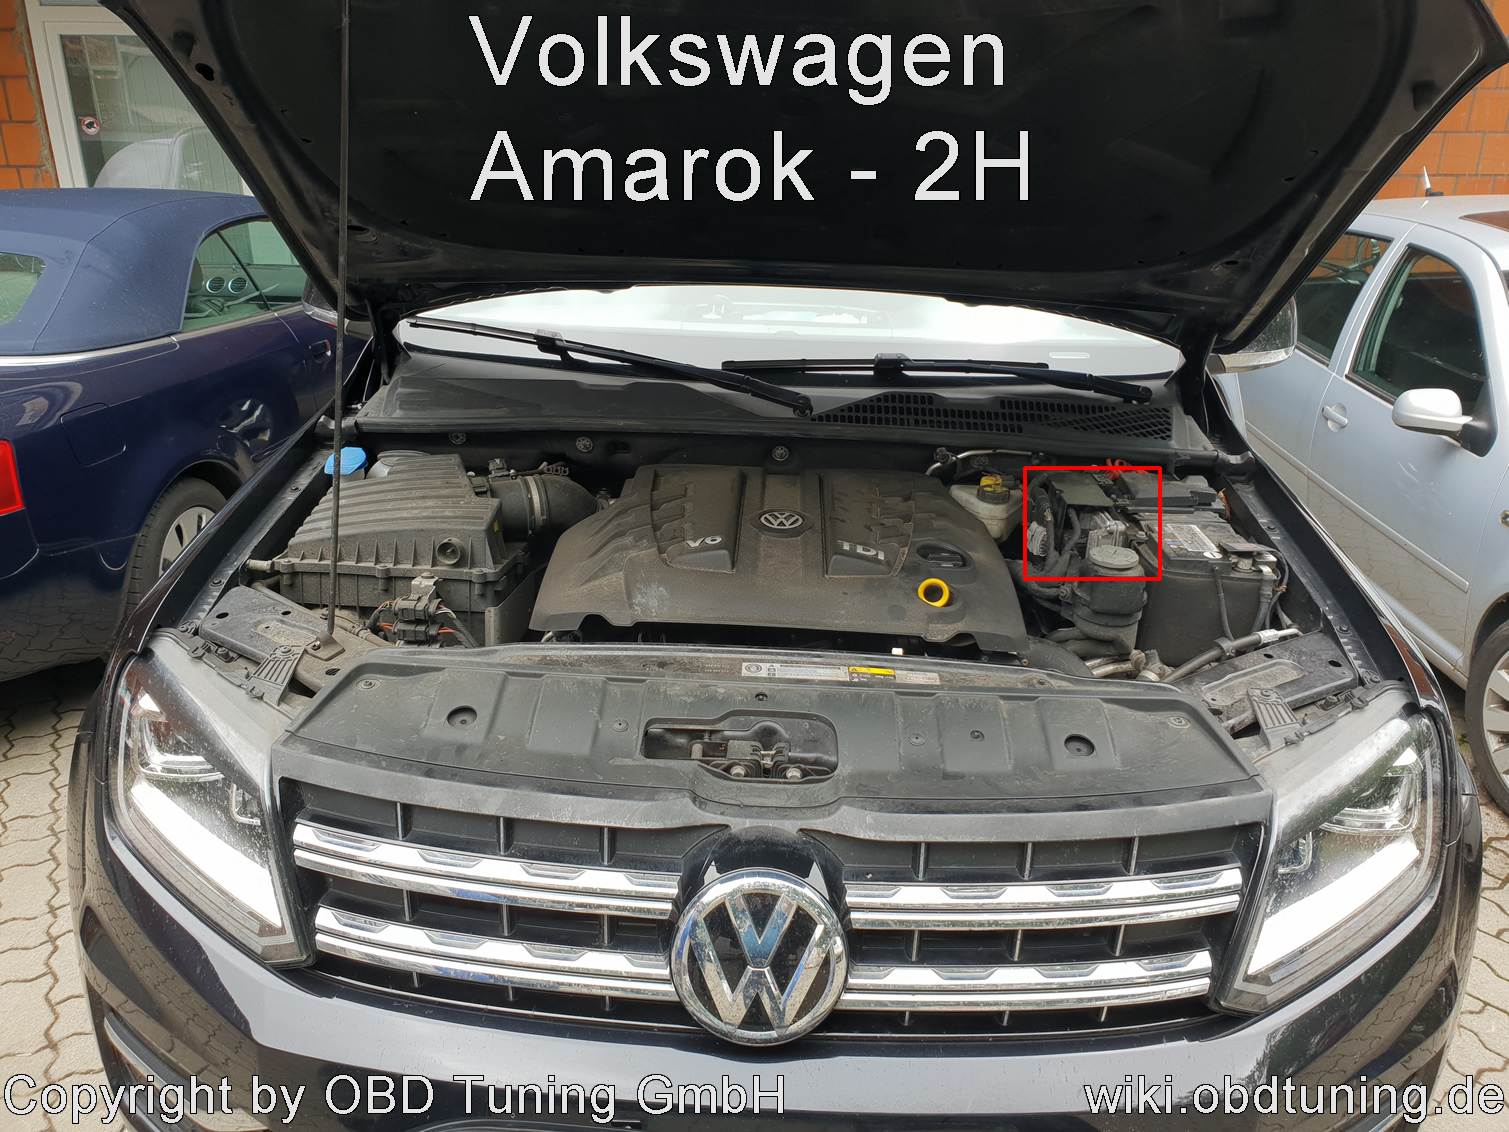 VW Amarok 2H ECU.jpg